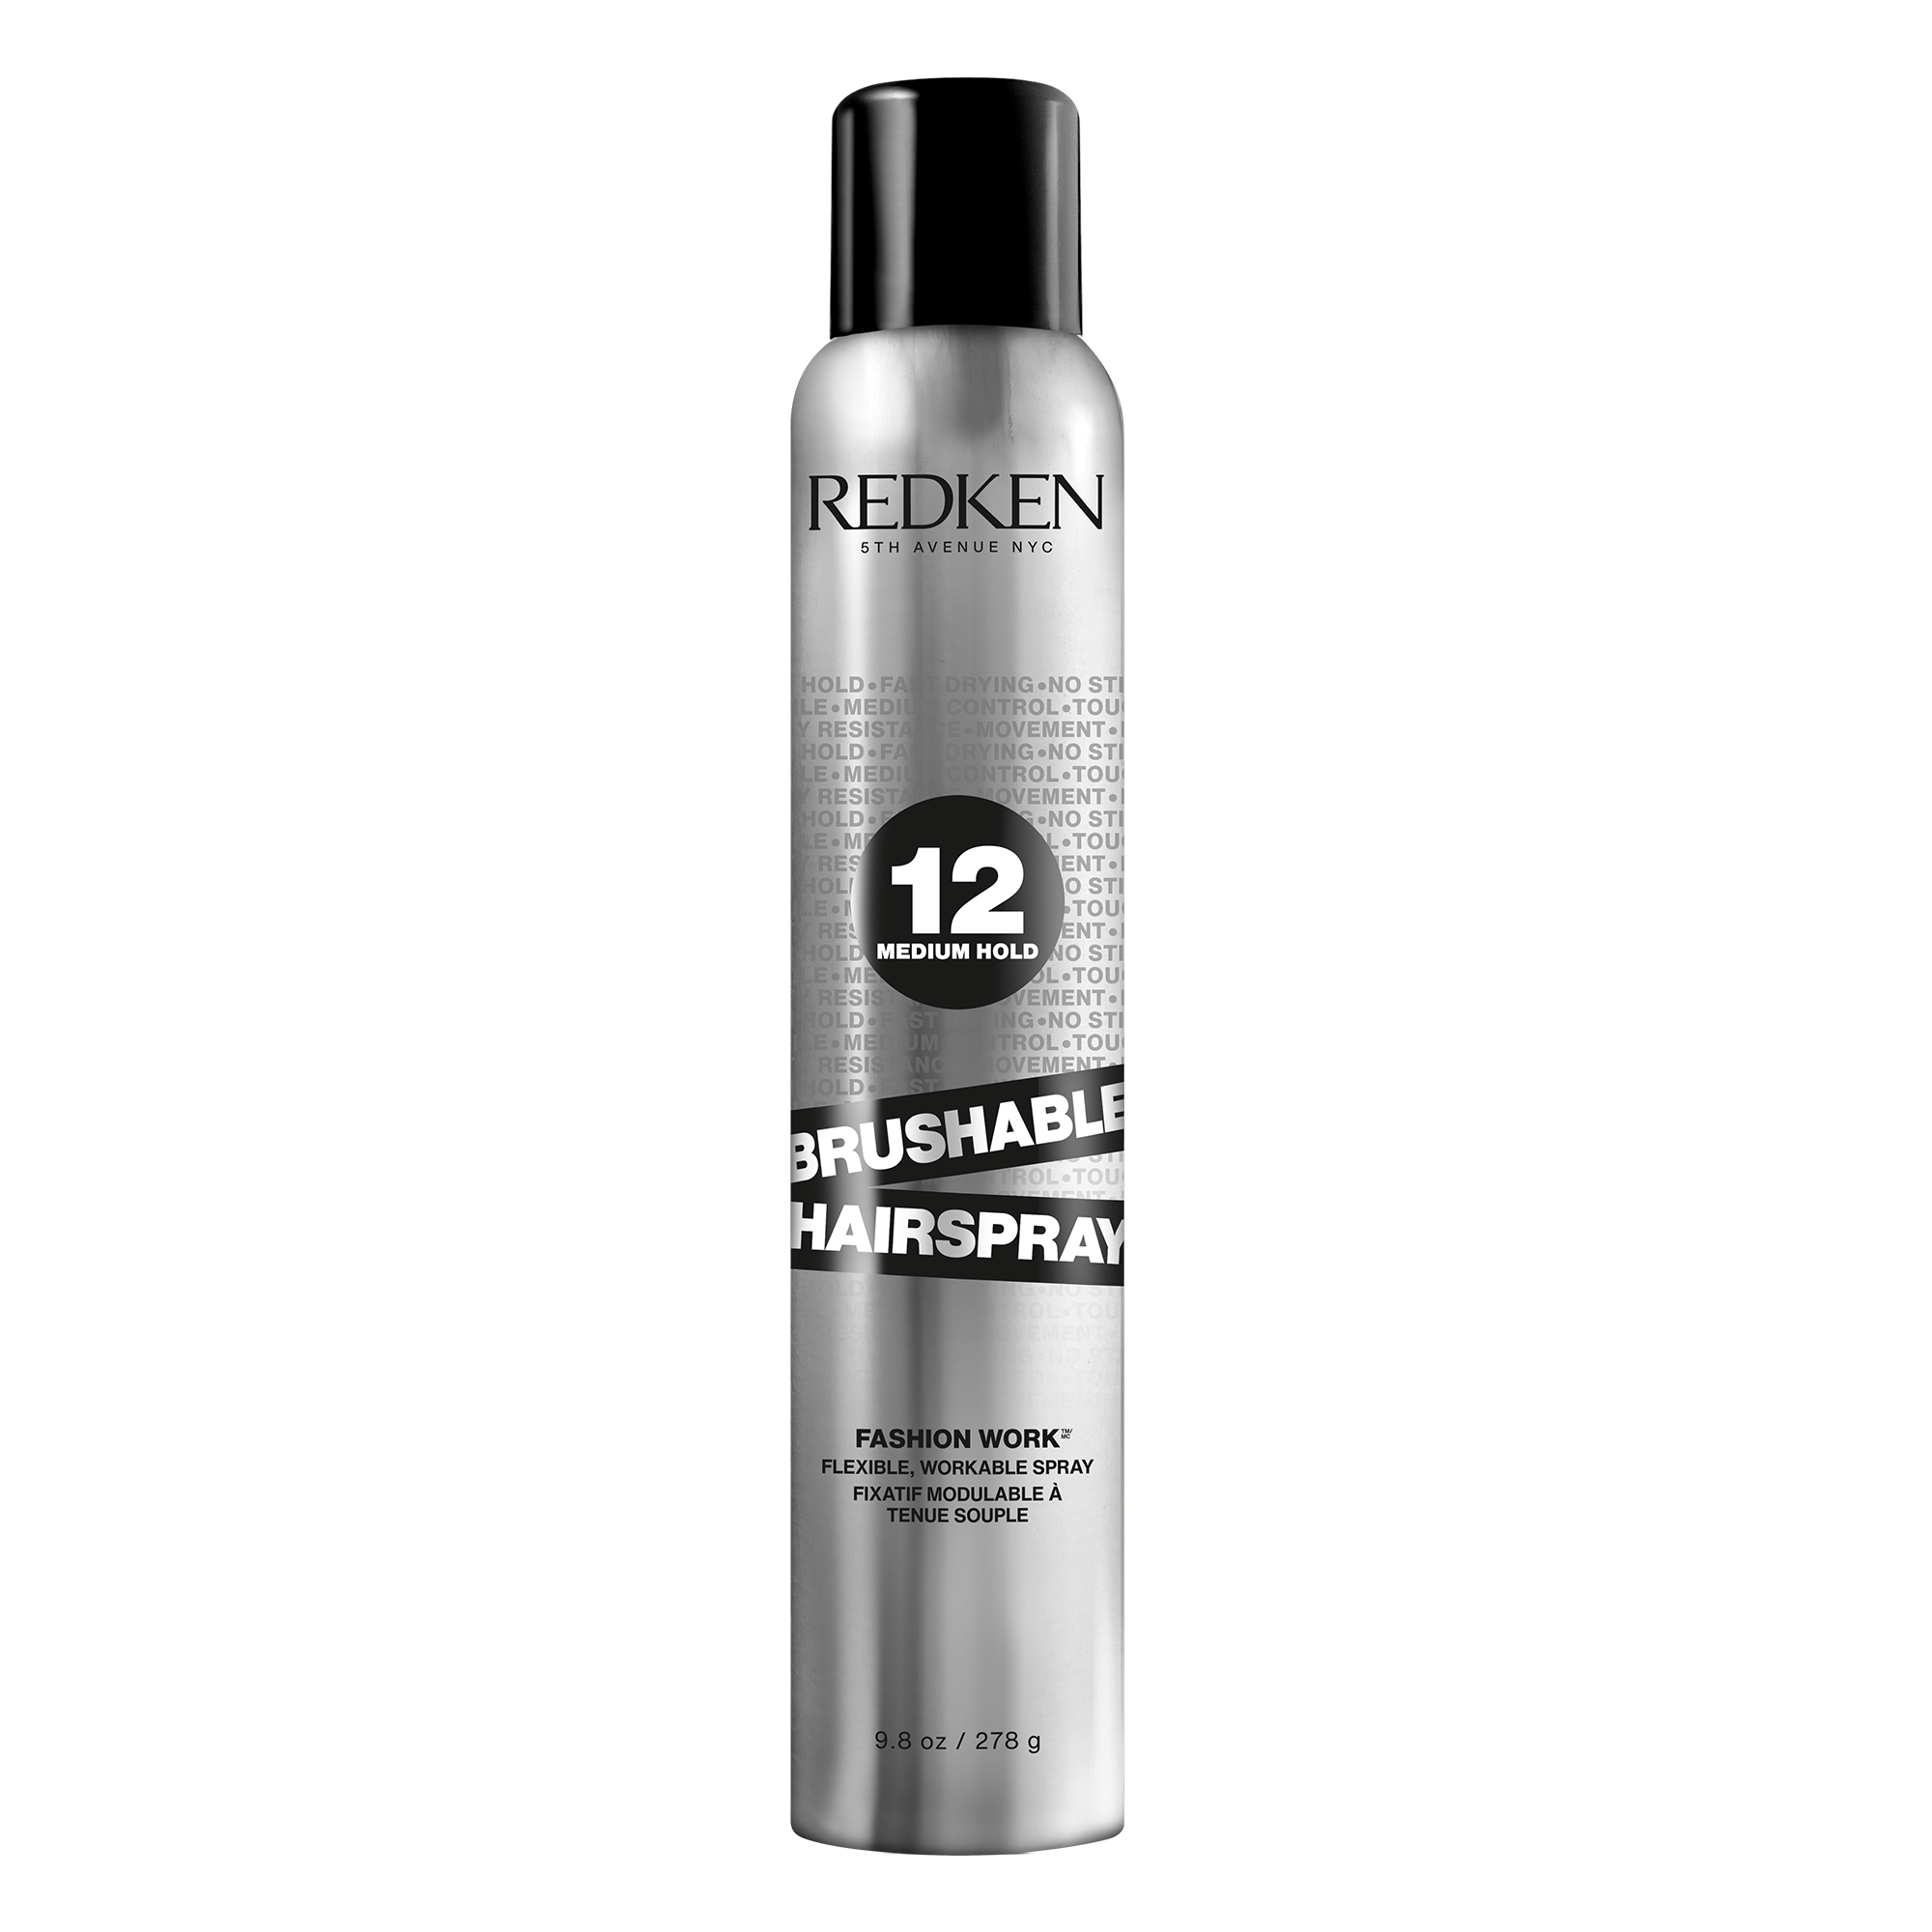 REDKEN Brushable Hairspray 278g